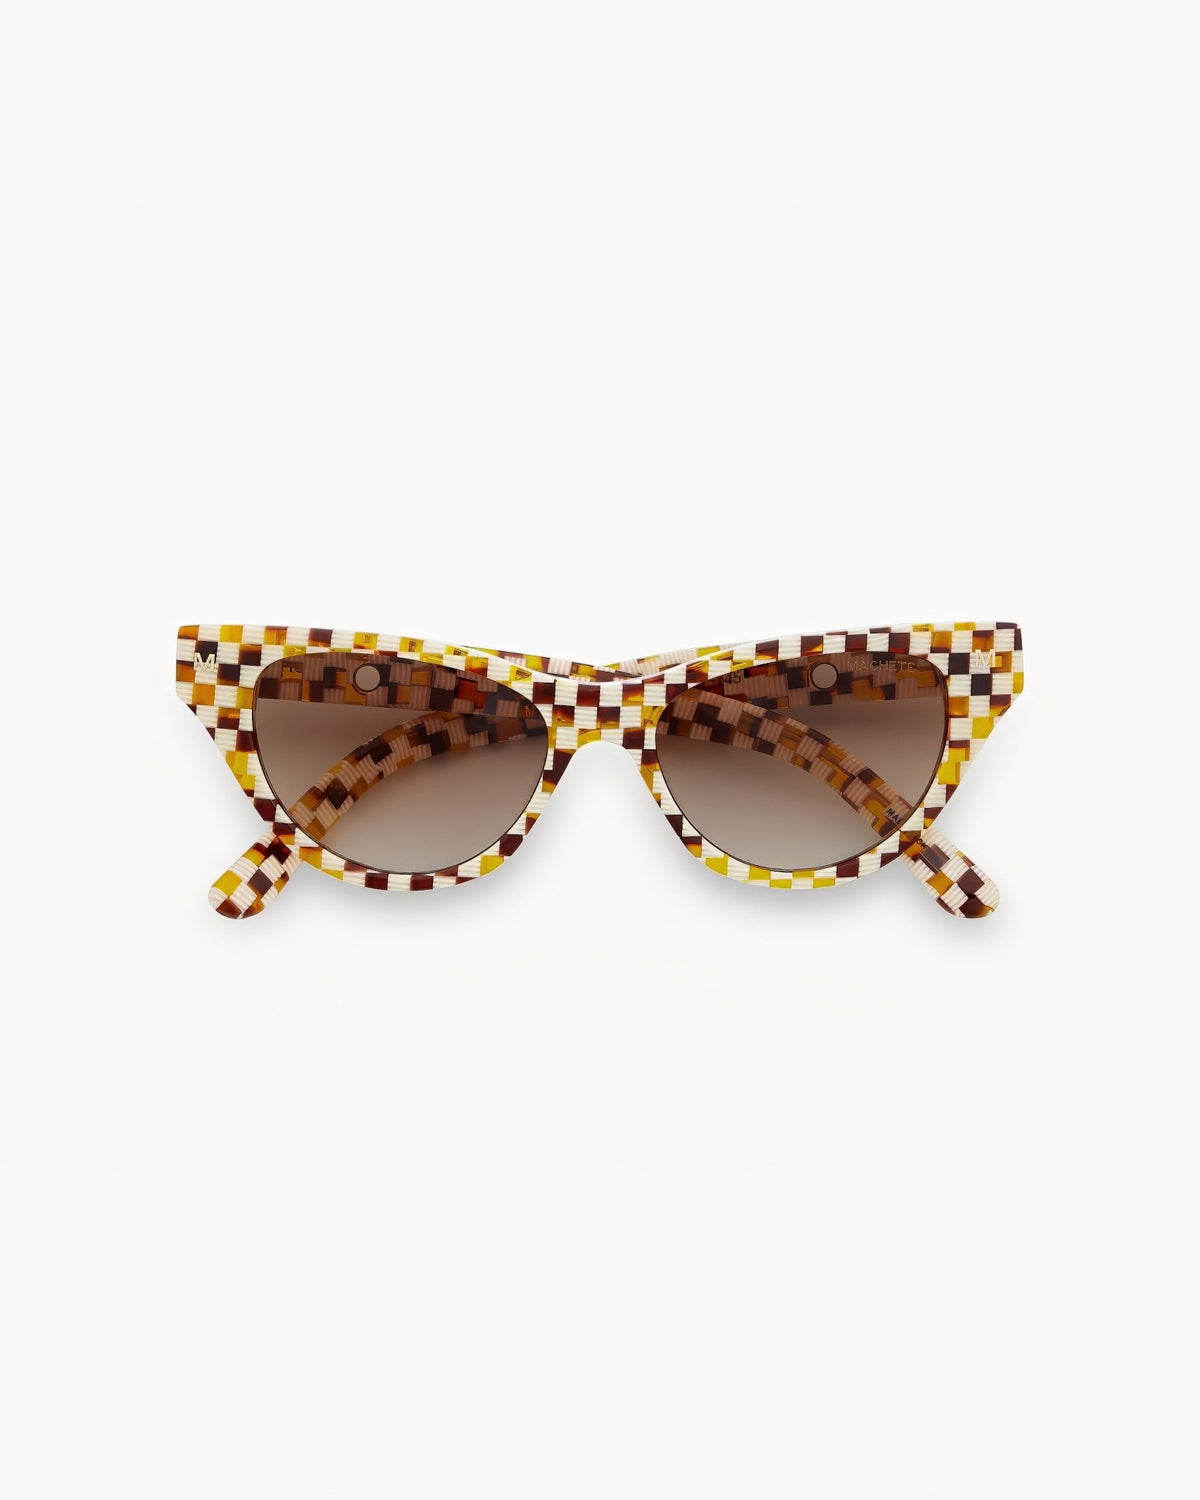 MACHETE Suzy Sunglasses in Tortoise Checker